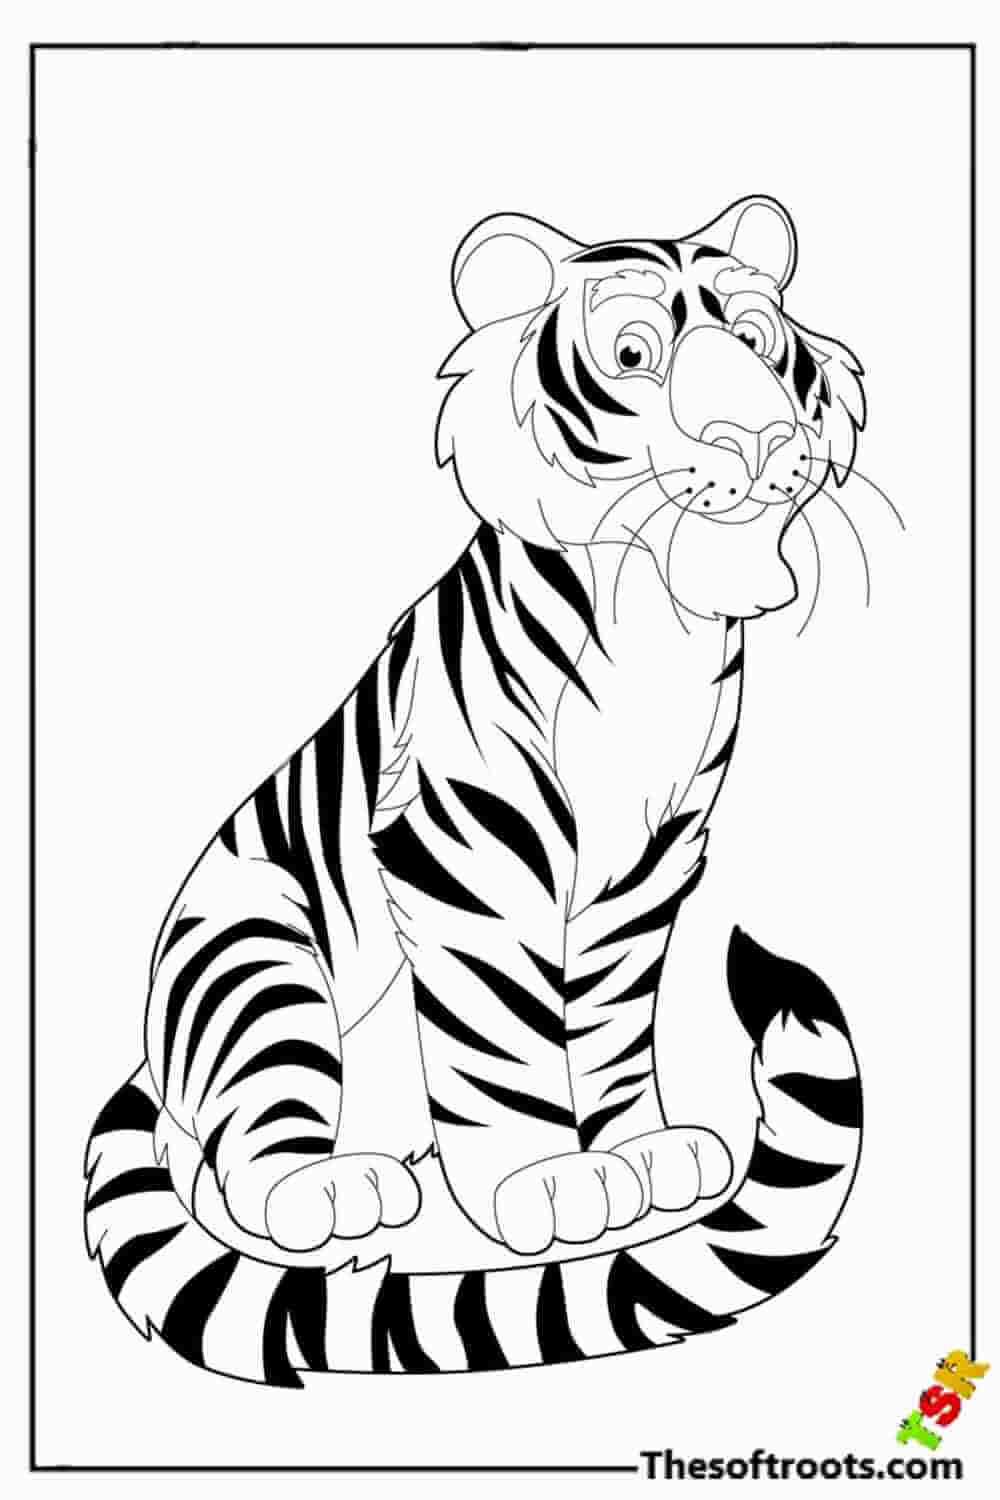 Amur tiger coloring pages